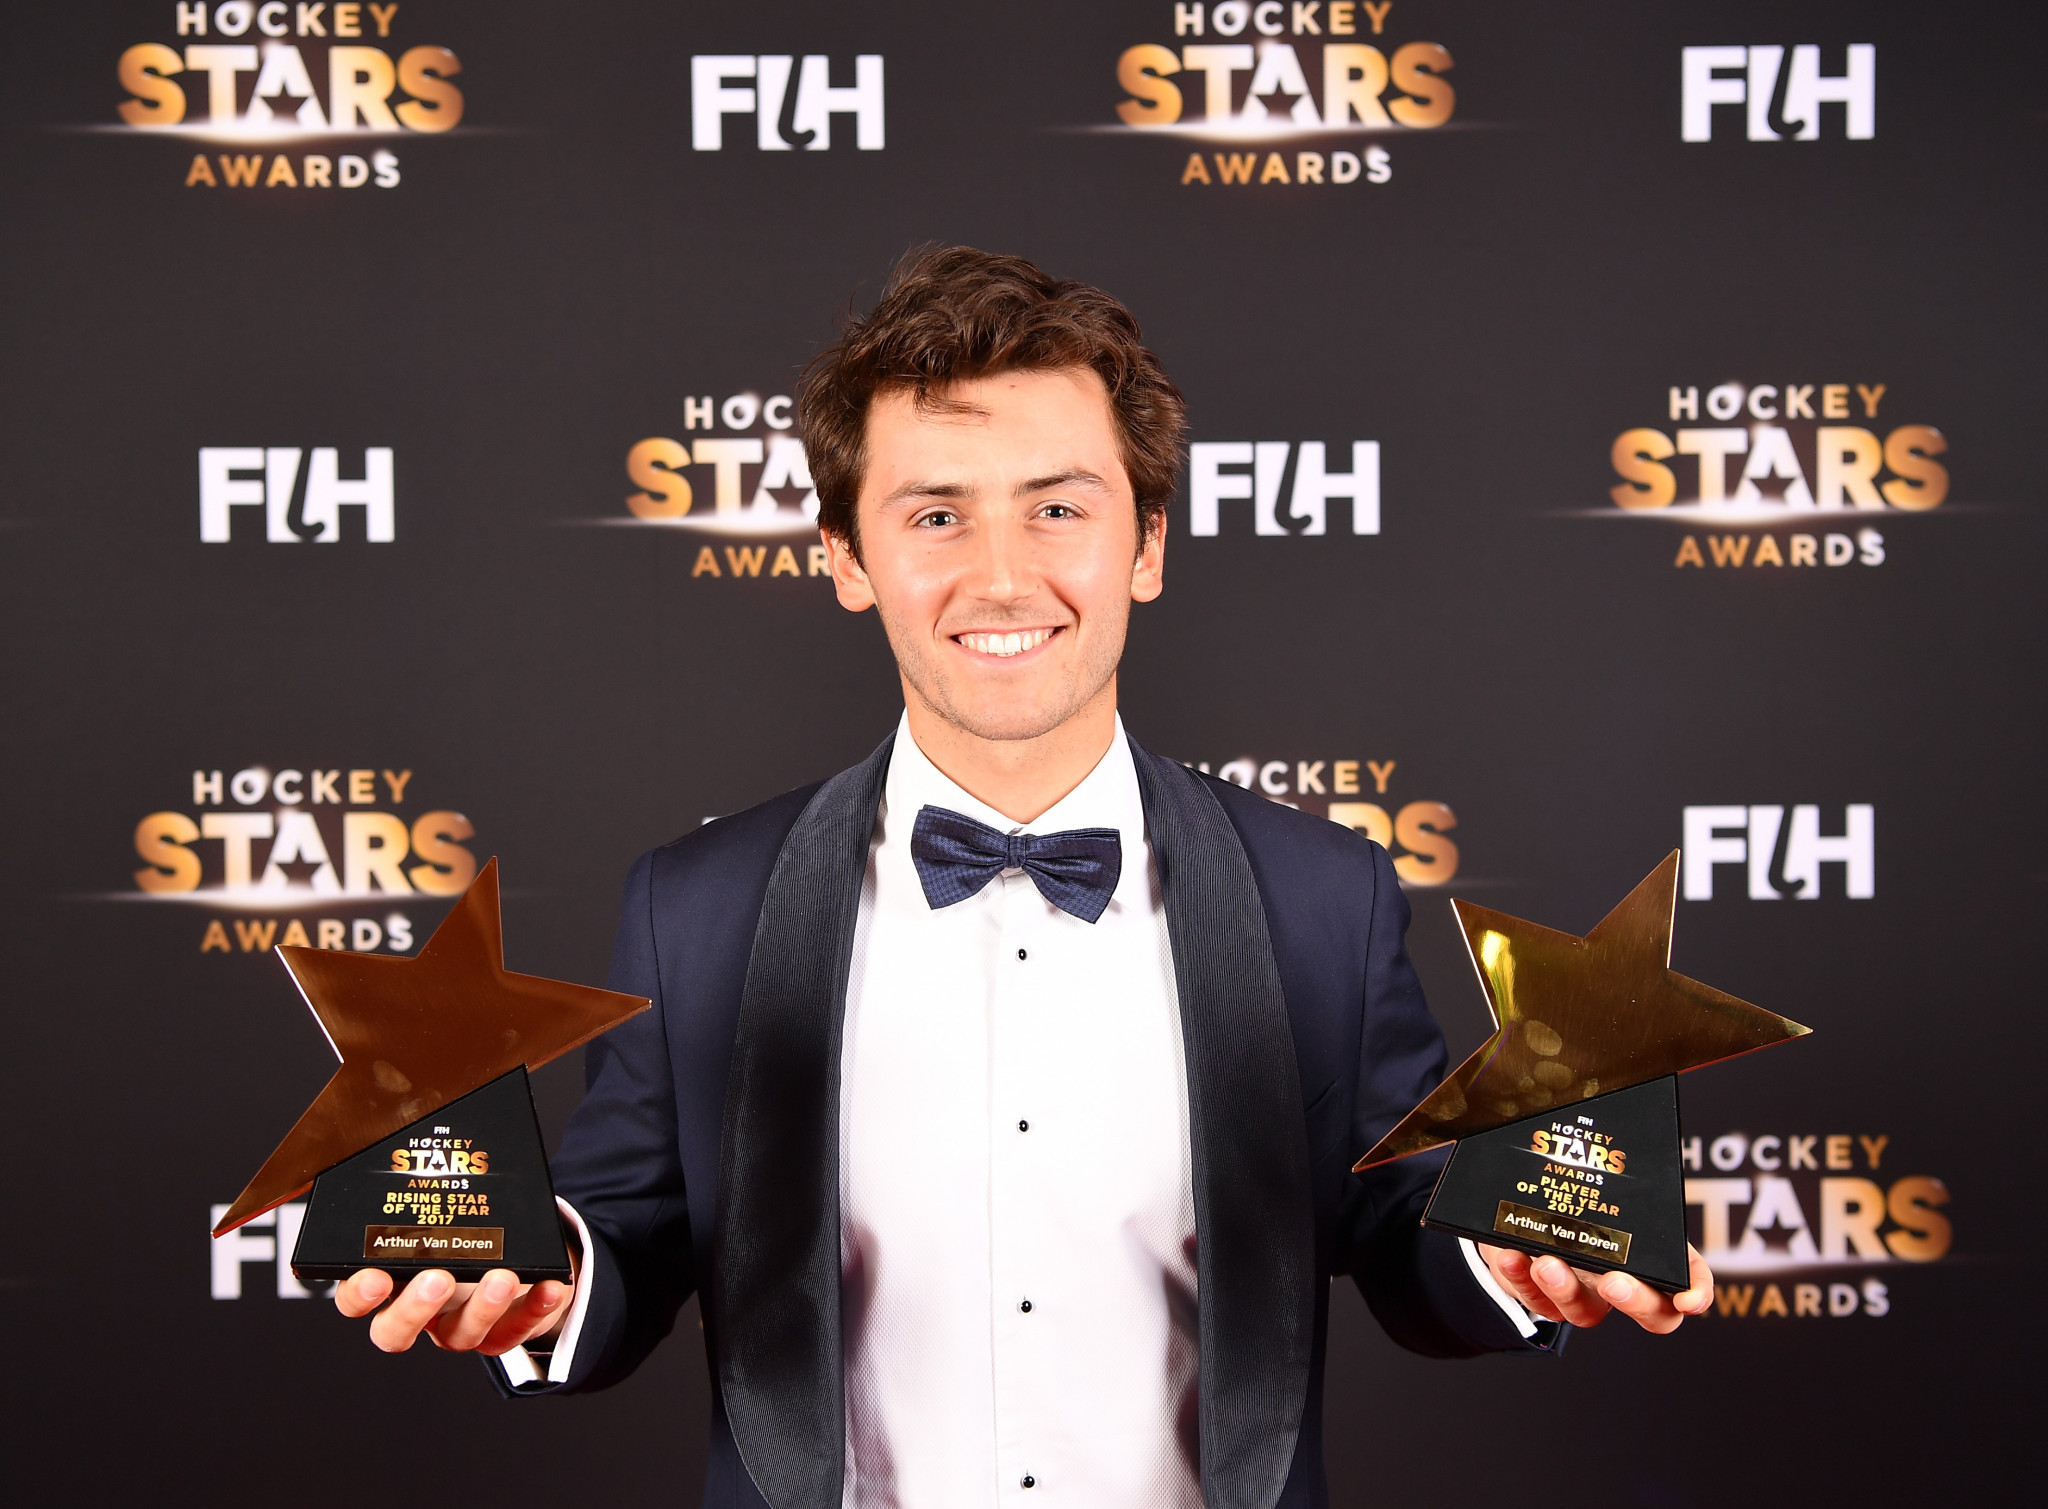 Van Doren scoops two prizes at FIH Hockey Stars Awards